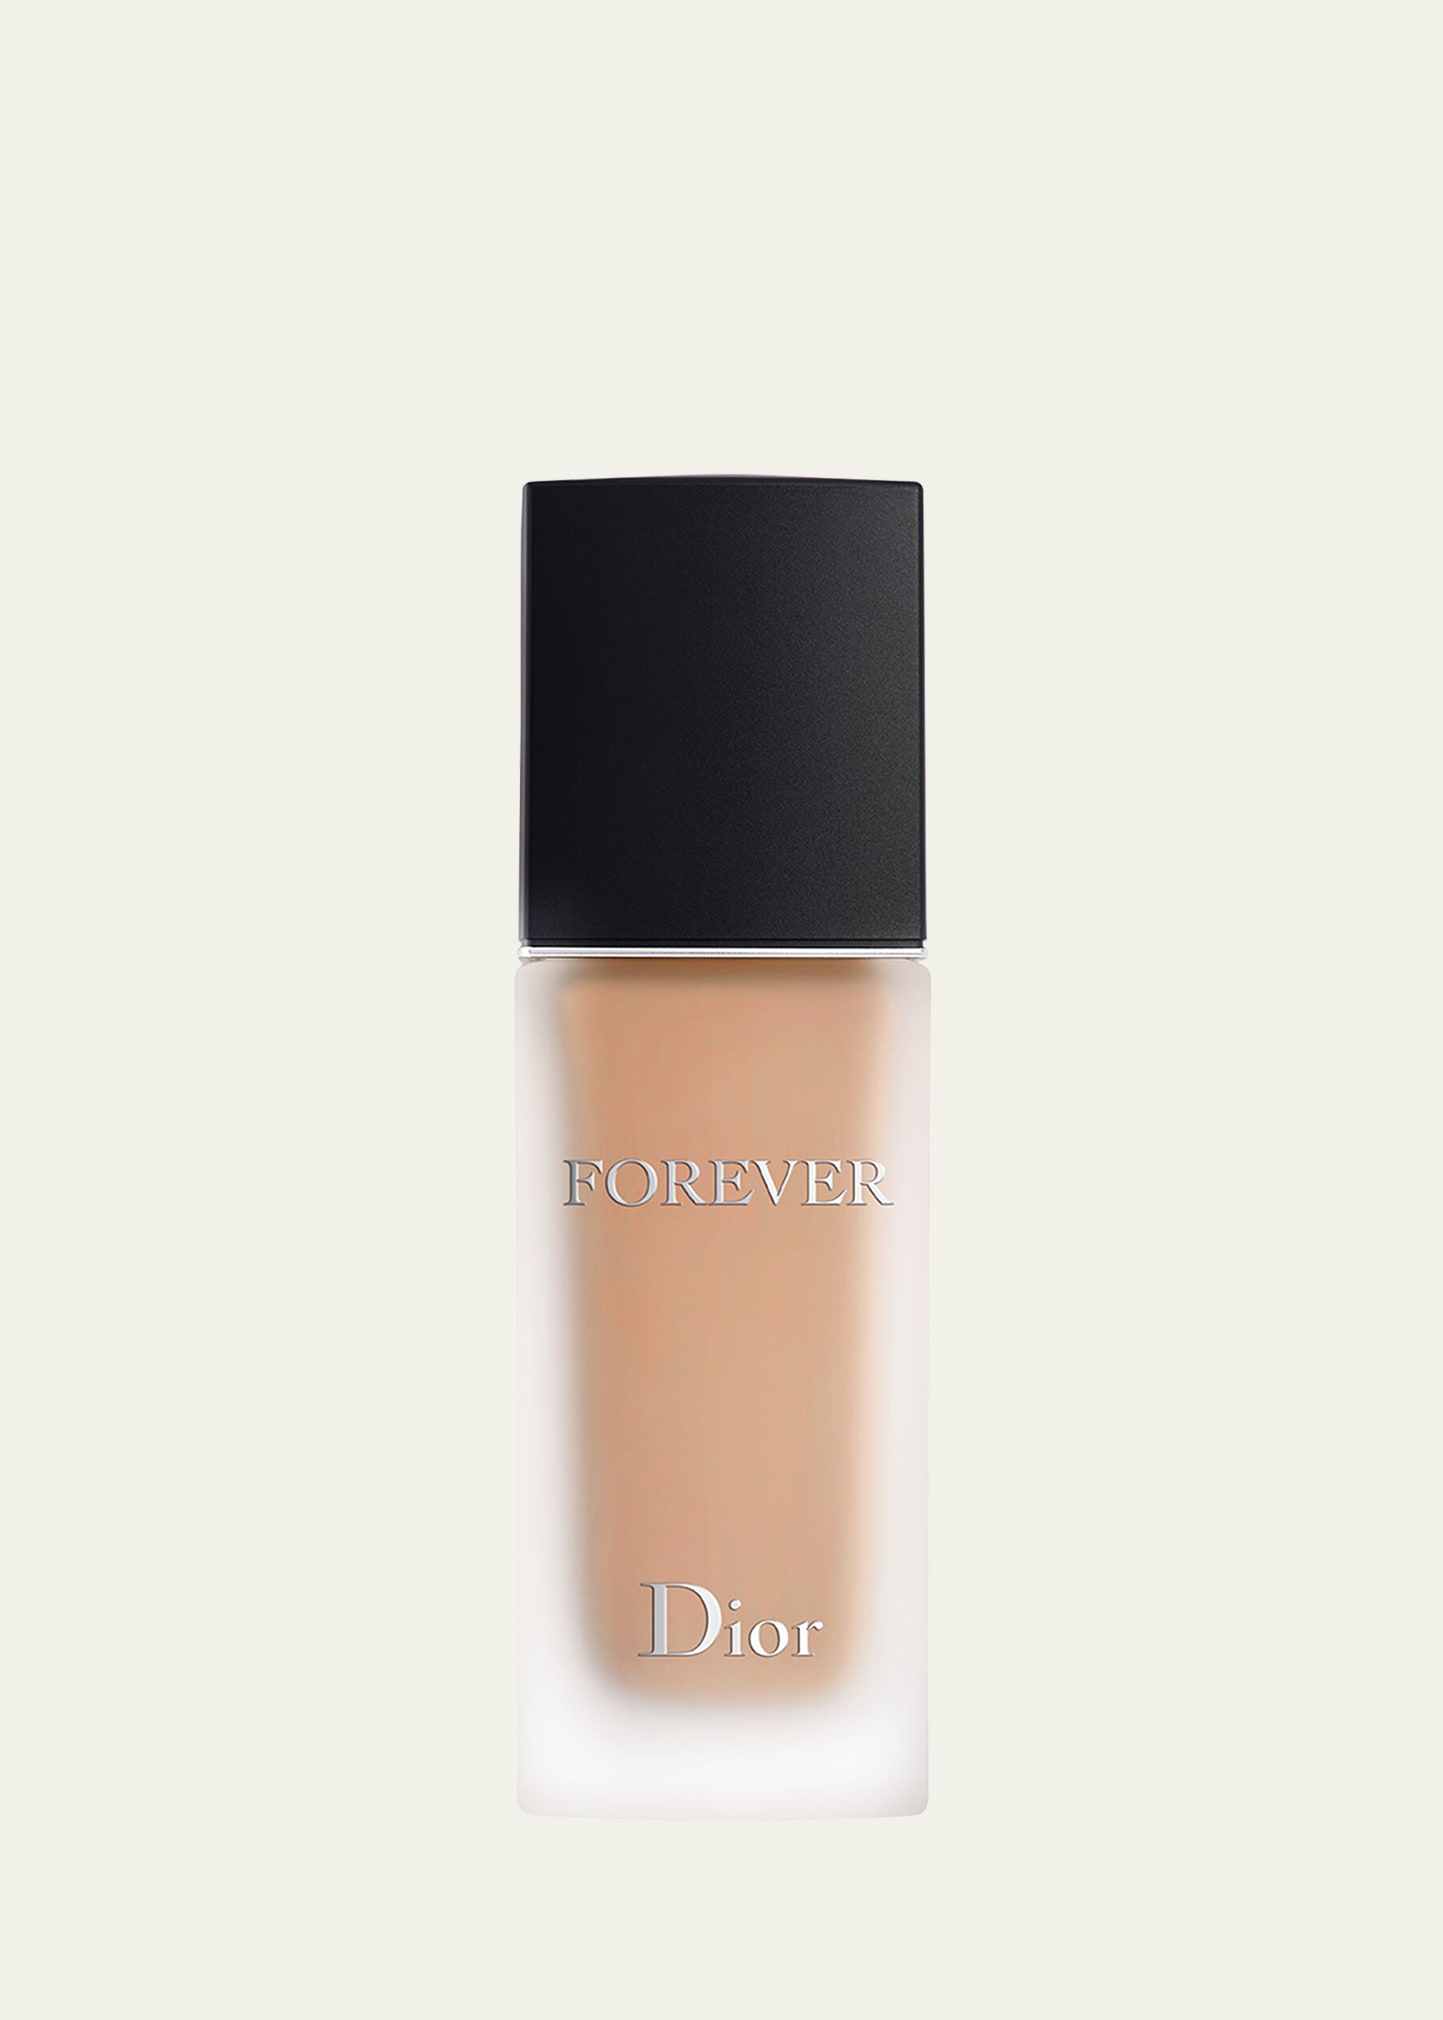 Dior 1 Oz. Forever Matte Skincare Foundation Spf 15 In 3.5 Neutral